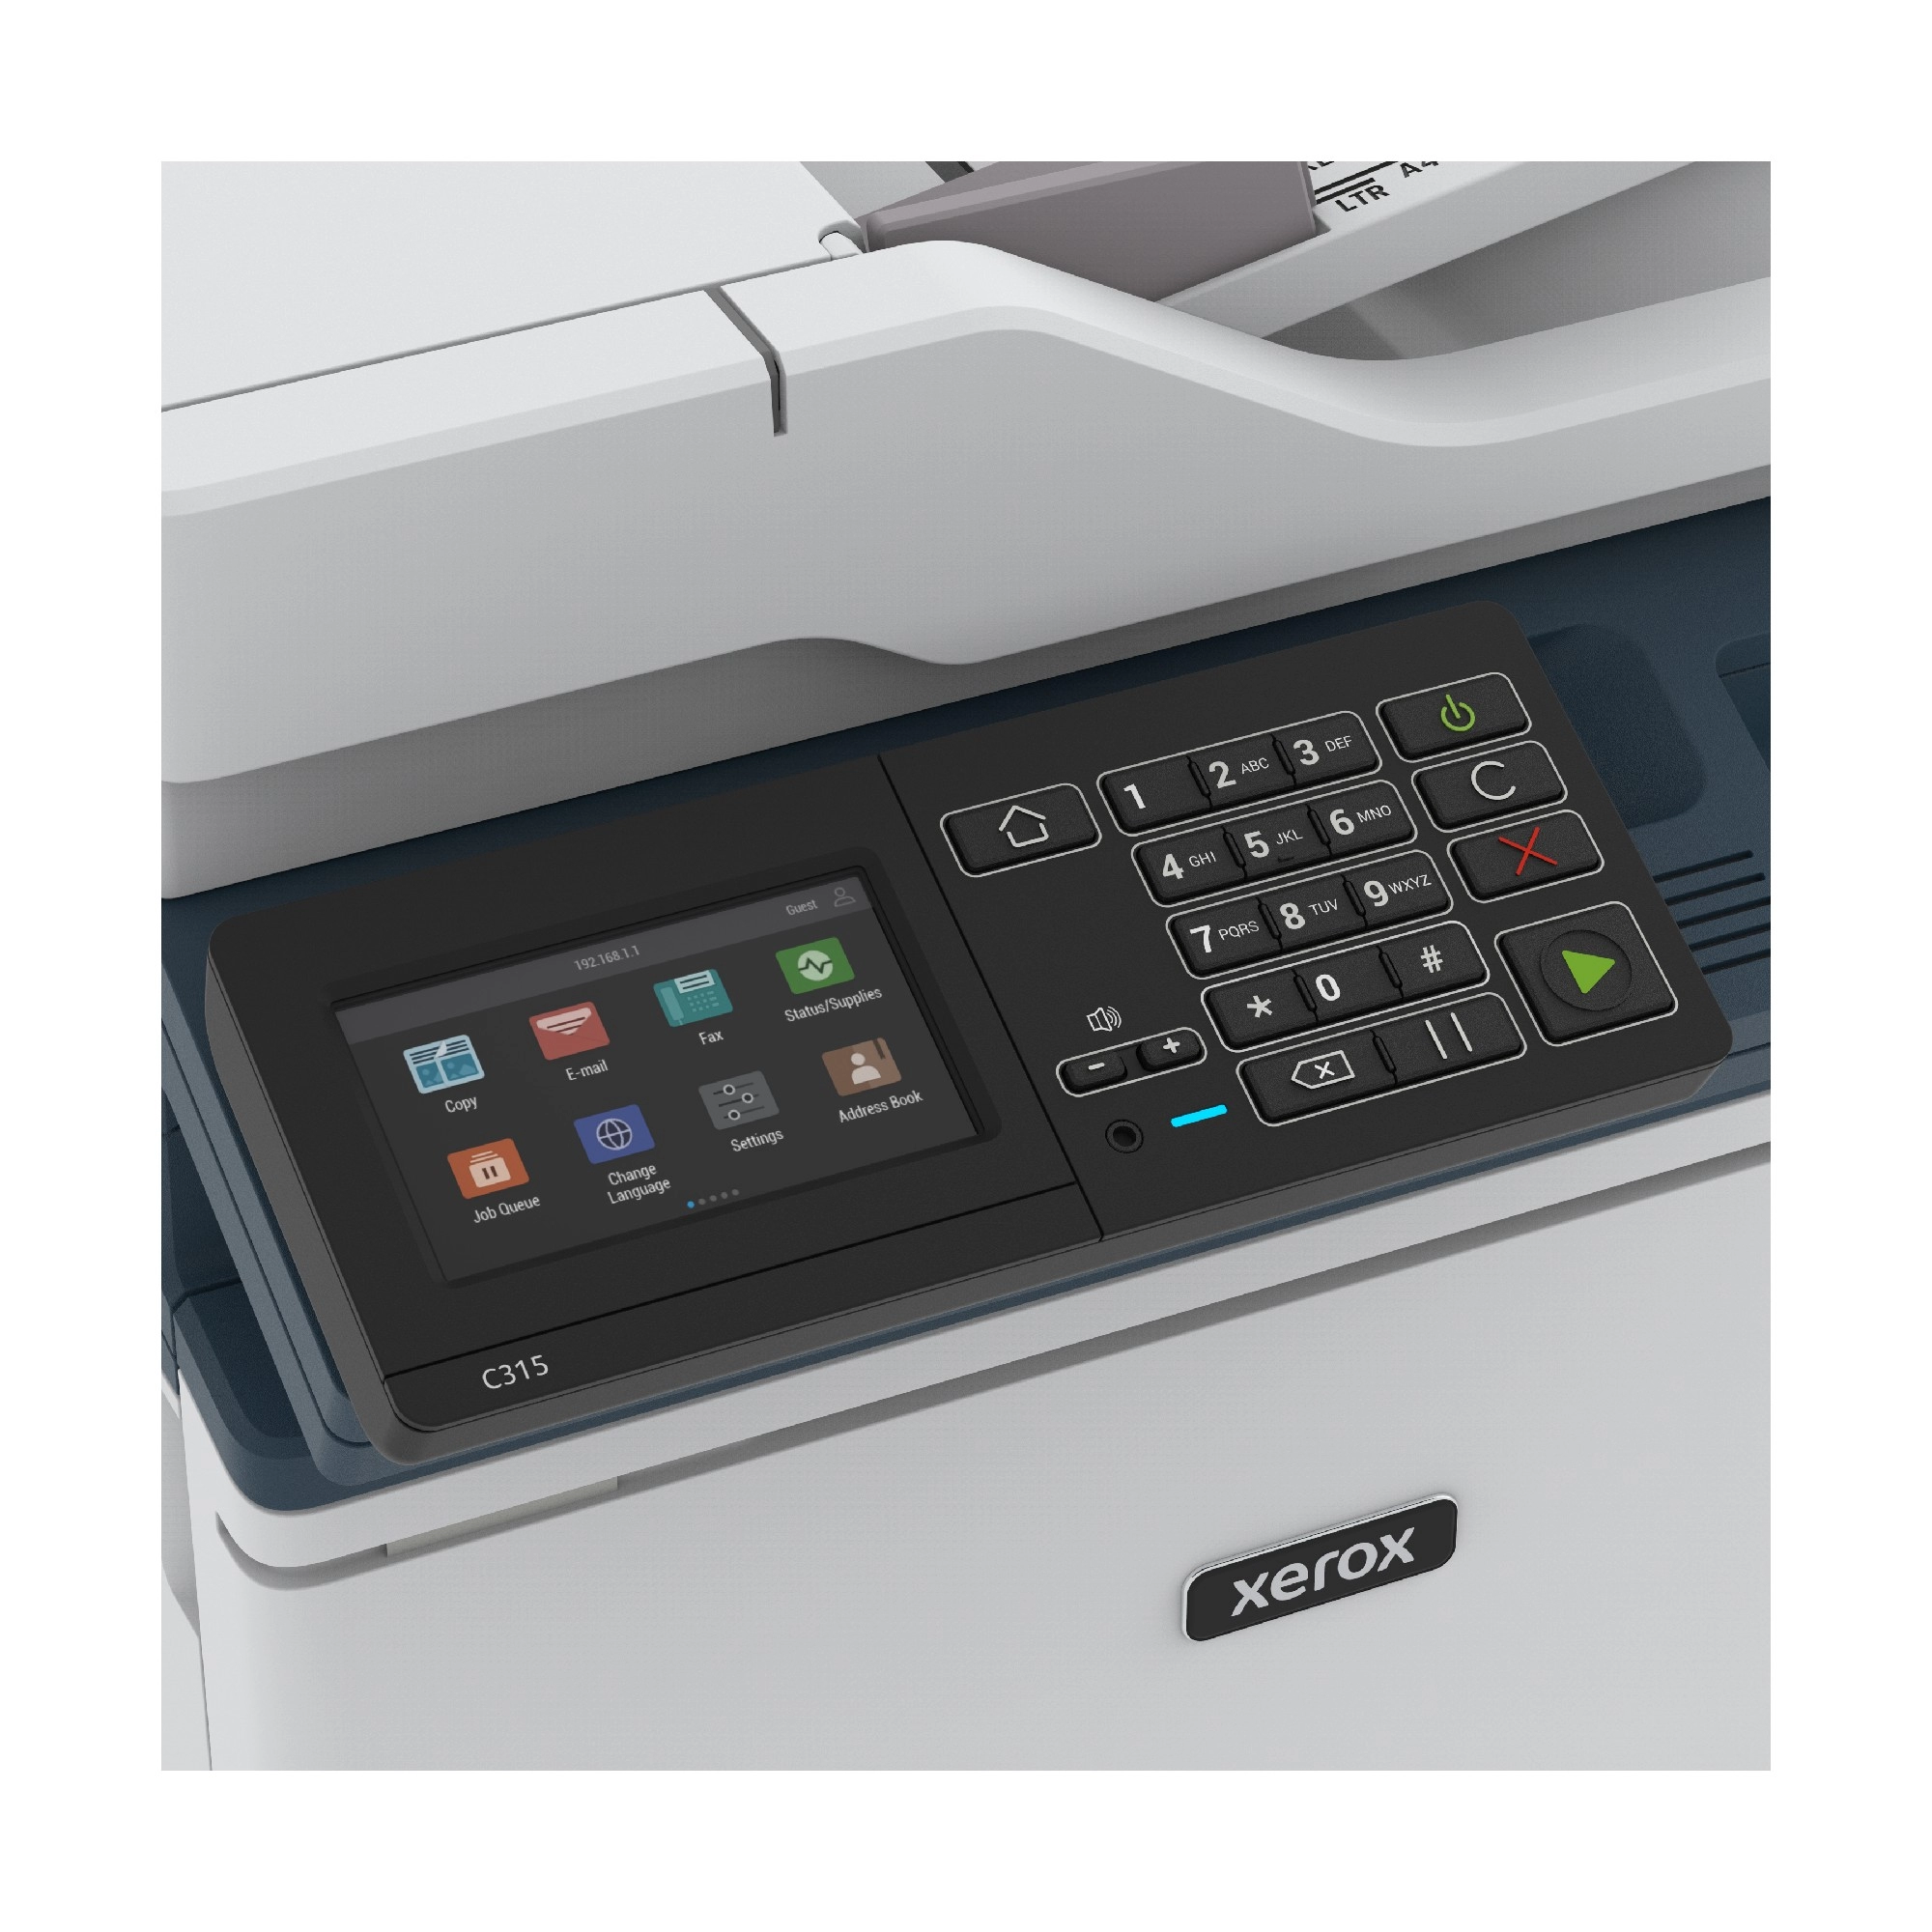 MFD Xerox C315 /  A4 / DADF / Duplex / Wi-Fi / Net / Fax / White